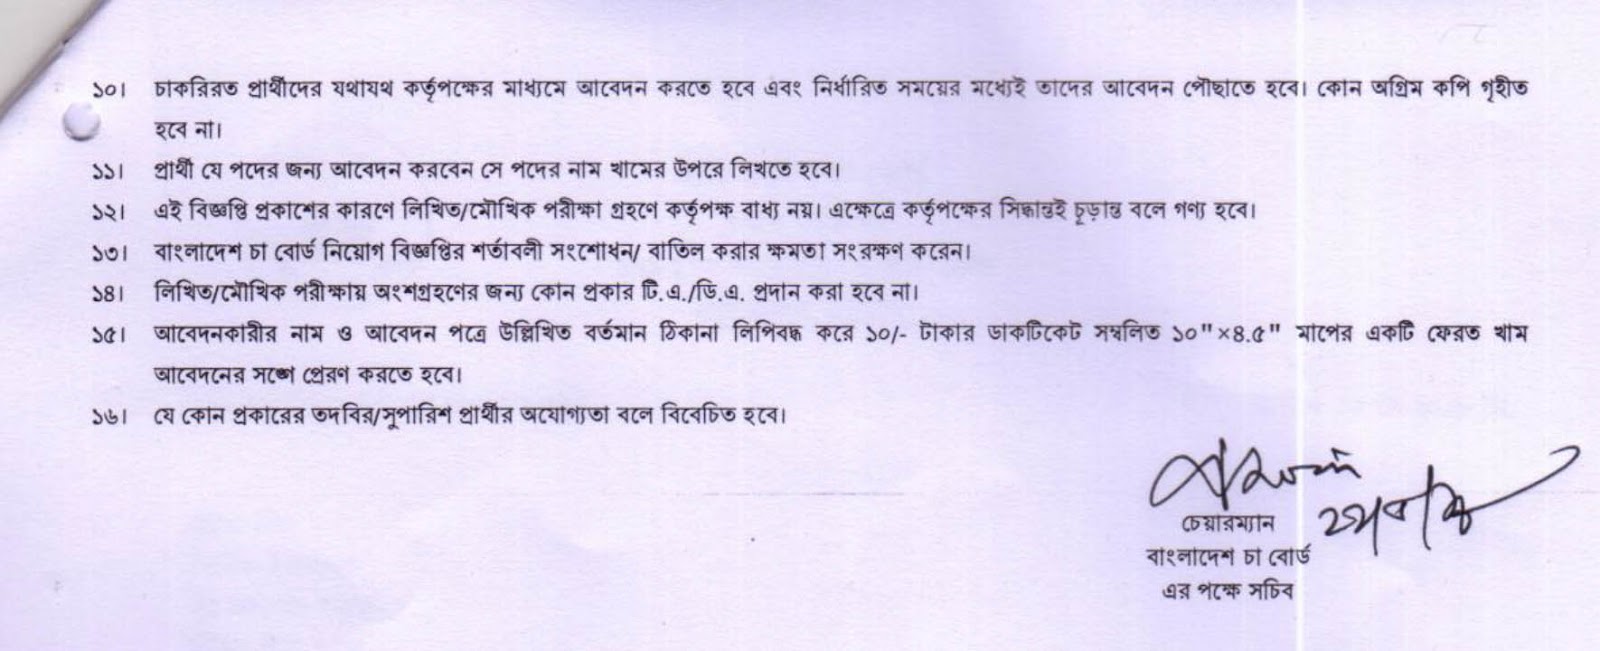 Bangladesh Tea Board Job Circular 2018 